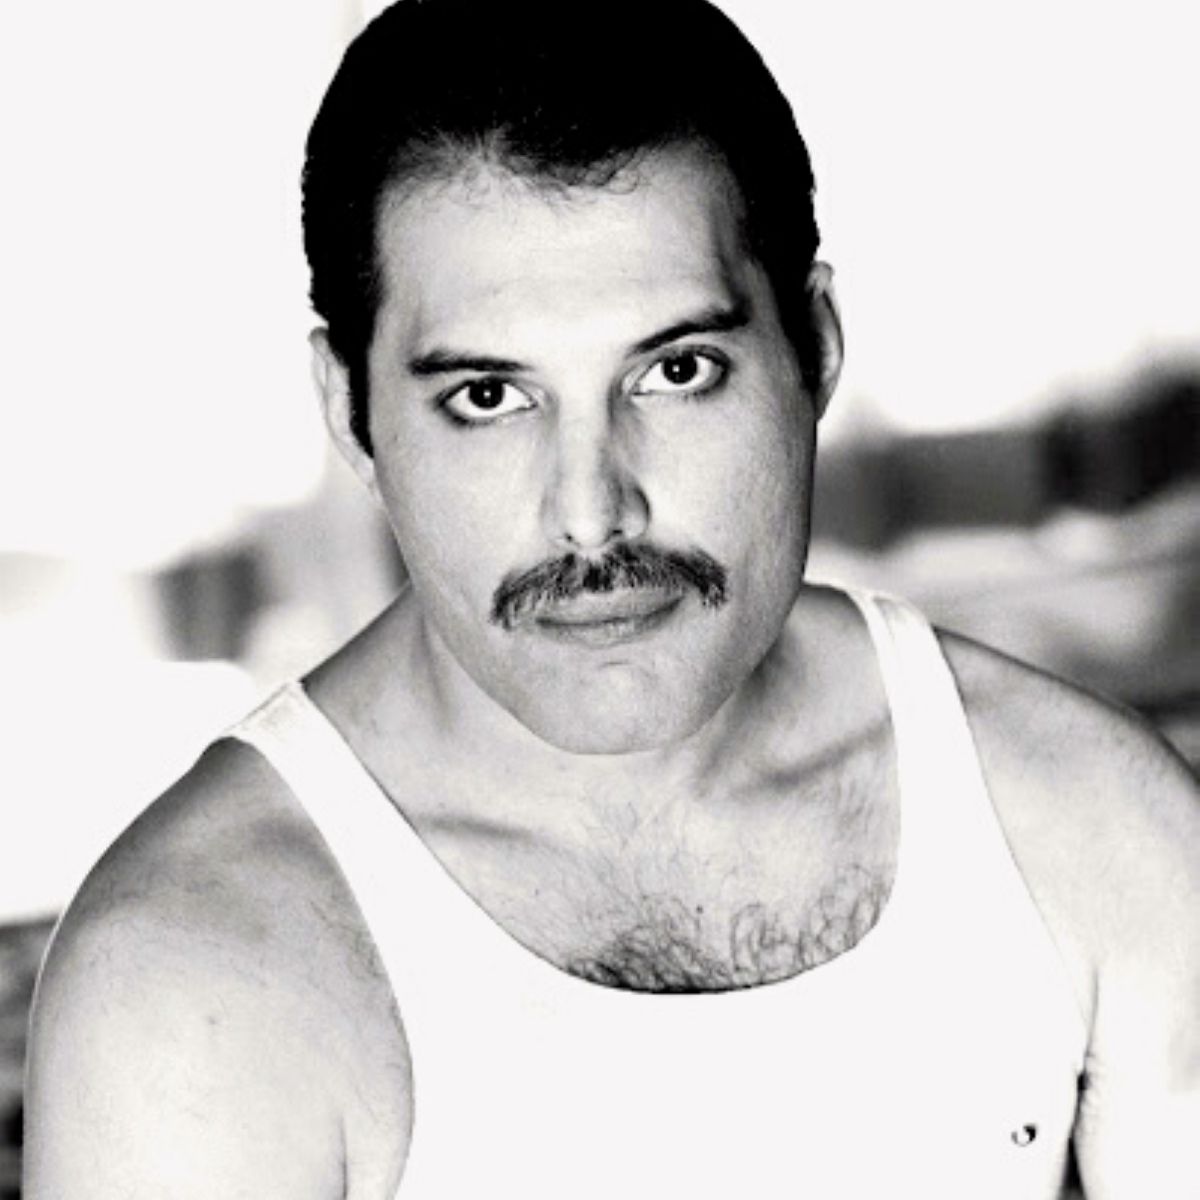 Портрет Фредди Меркьюри (Freddie Mercury) 